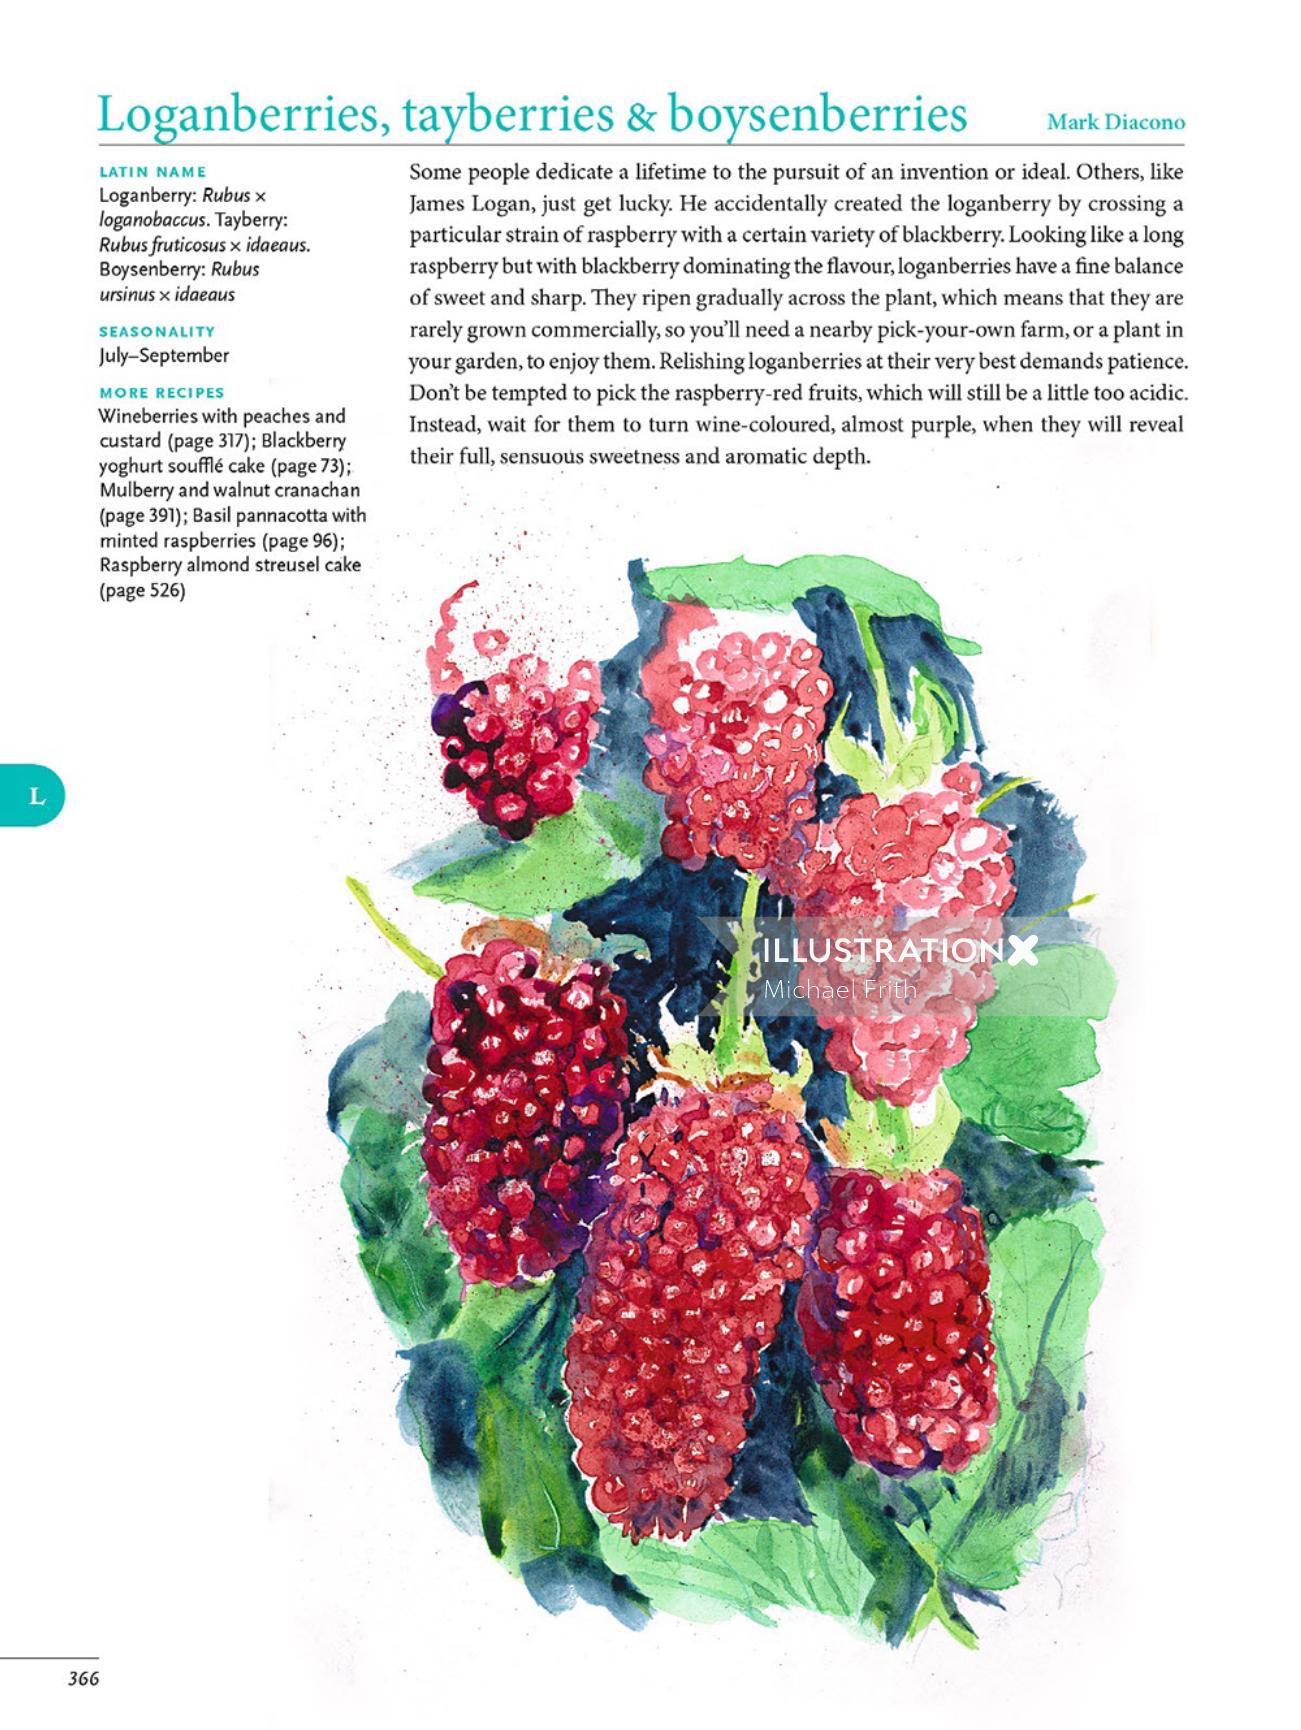 Arte editorial de frutas de morango